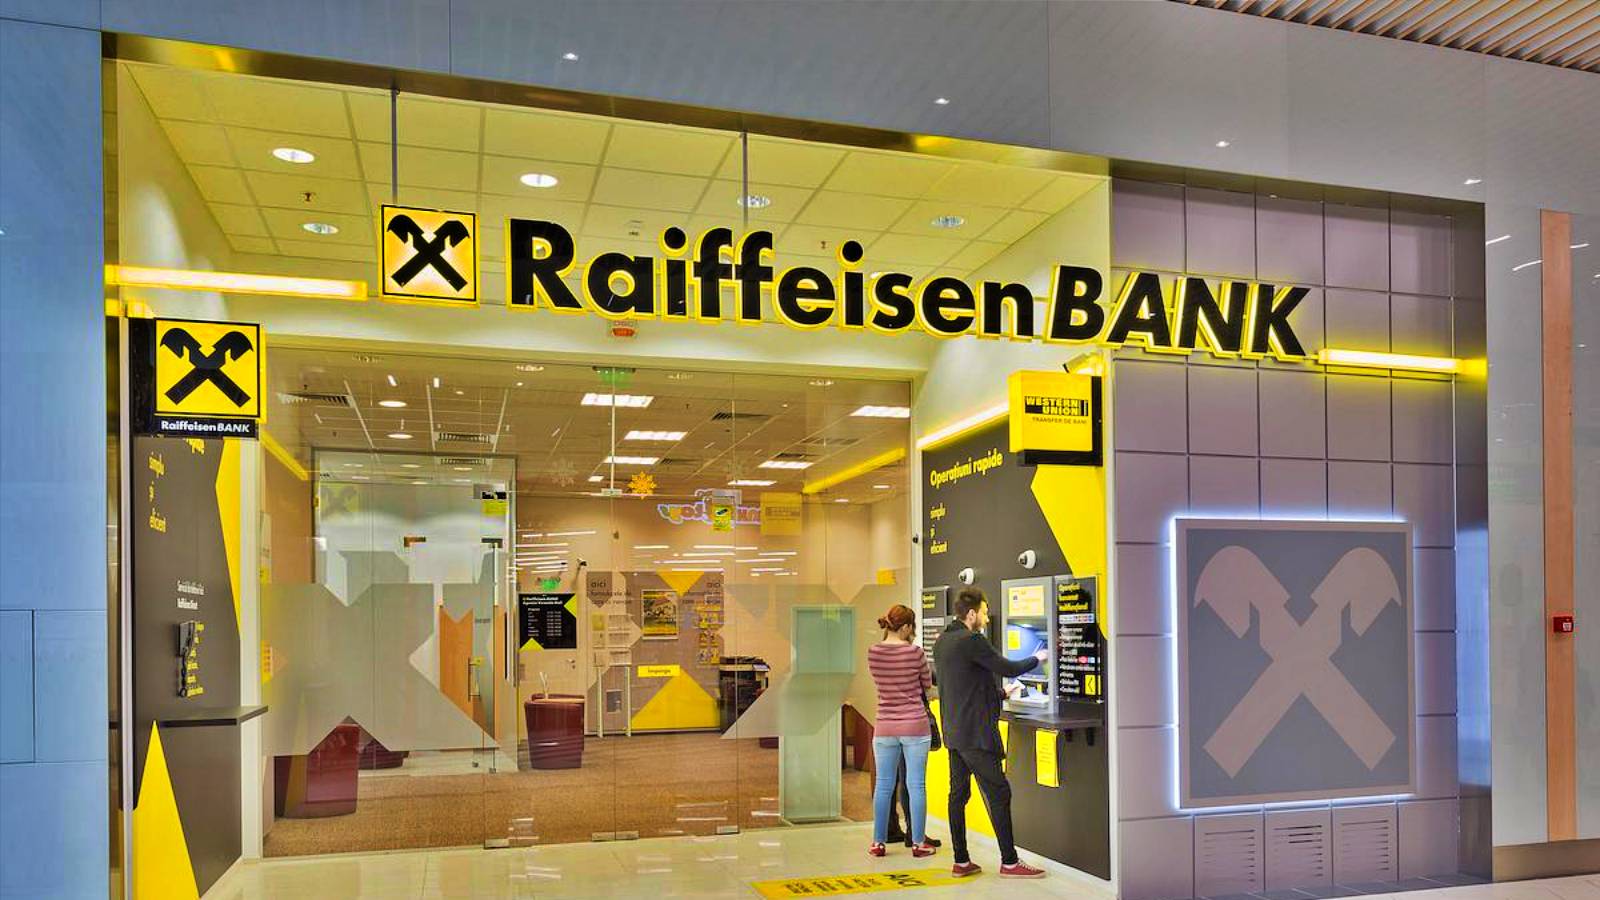 Planning Raiffeisenbank